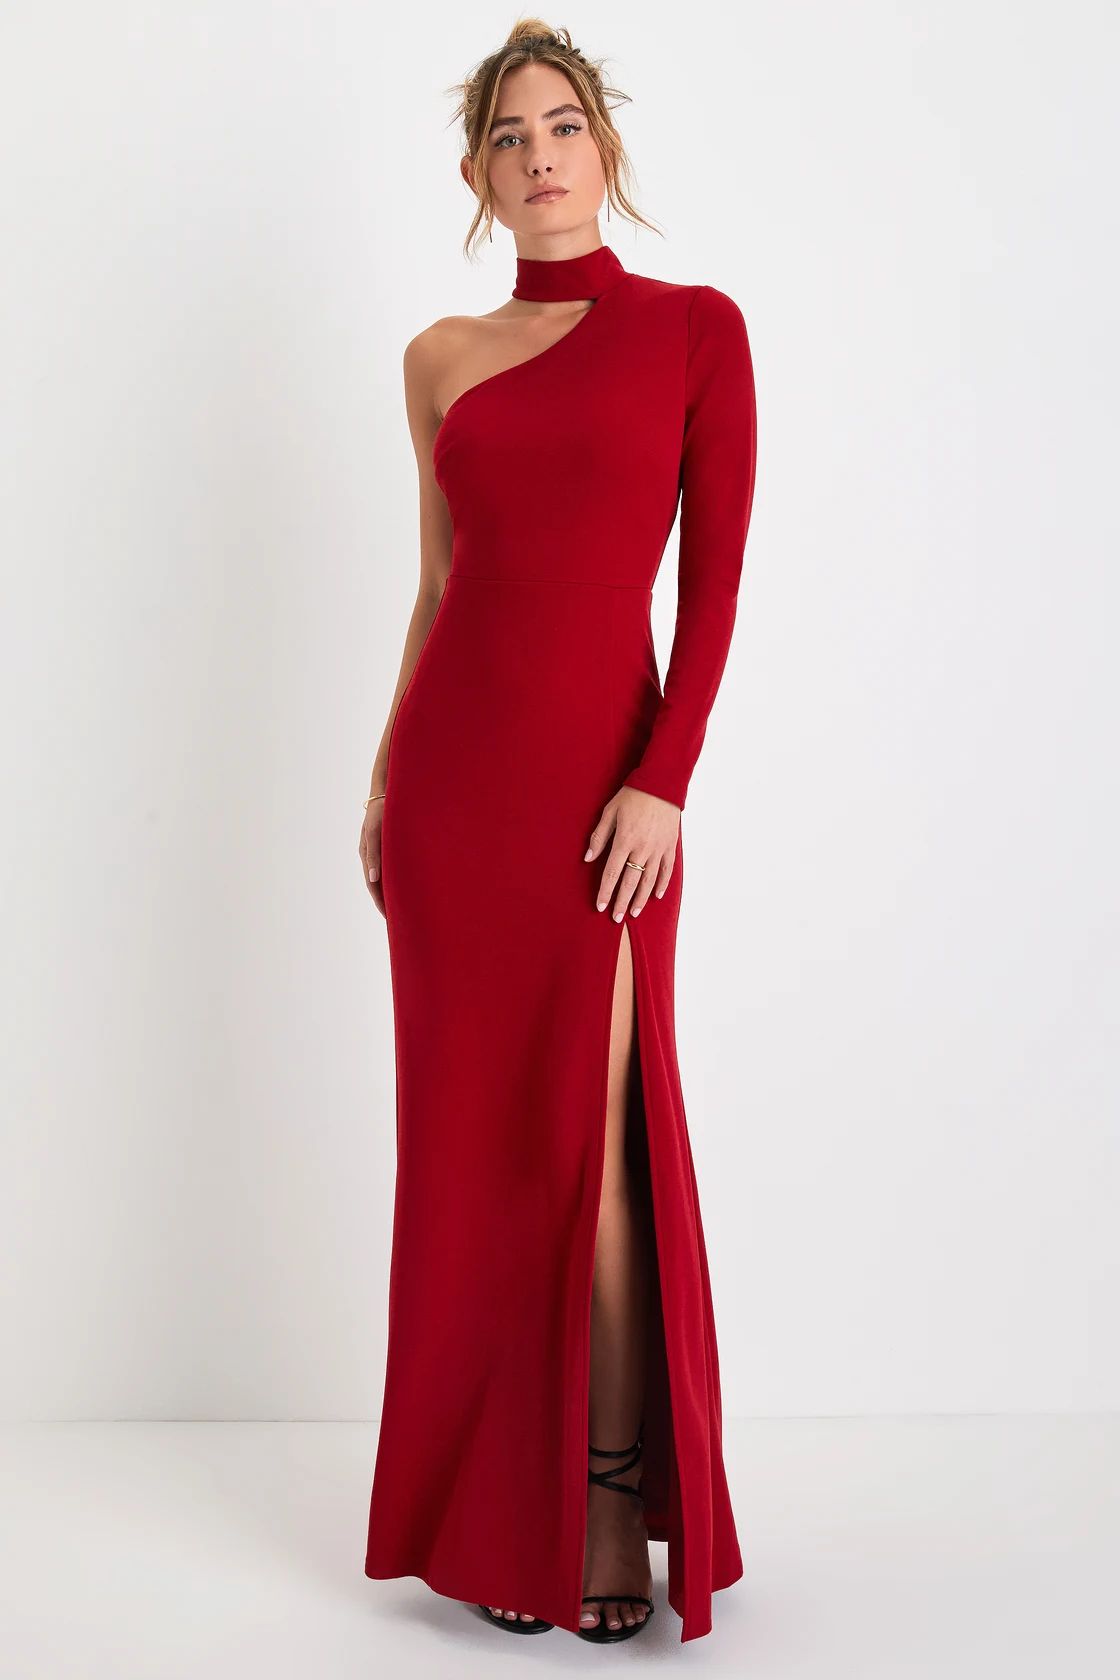 Keep It Interesting Red Cutout One-Shoulder Maxi Dress | Lulus (US)